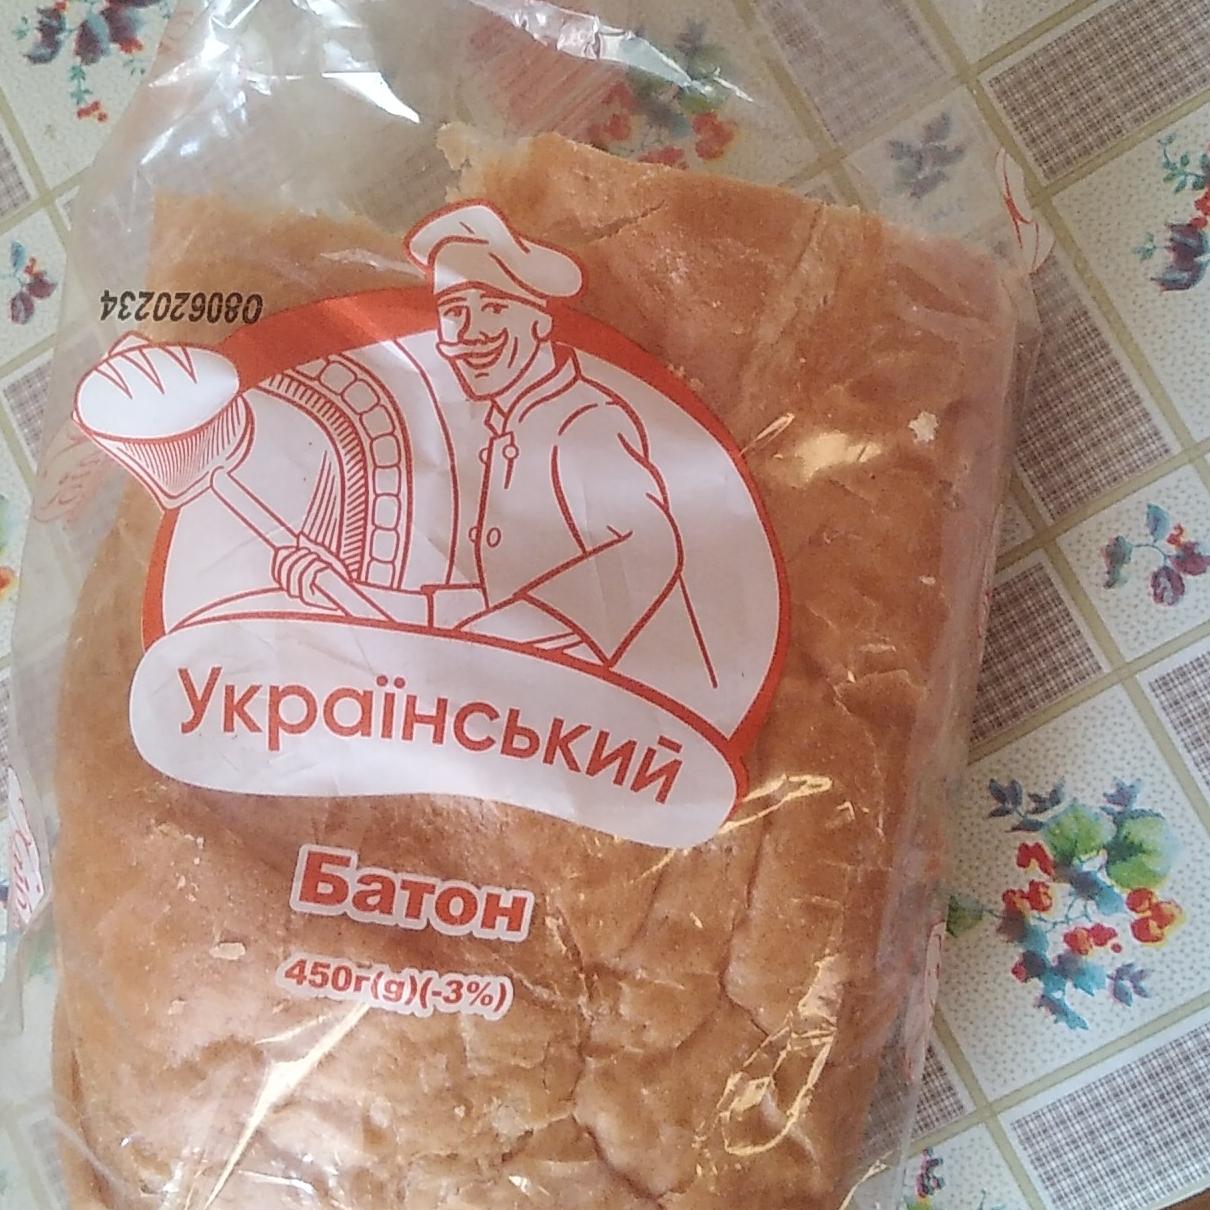 Фото - Батон Украинский Хлеб Житомира